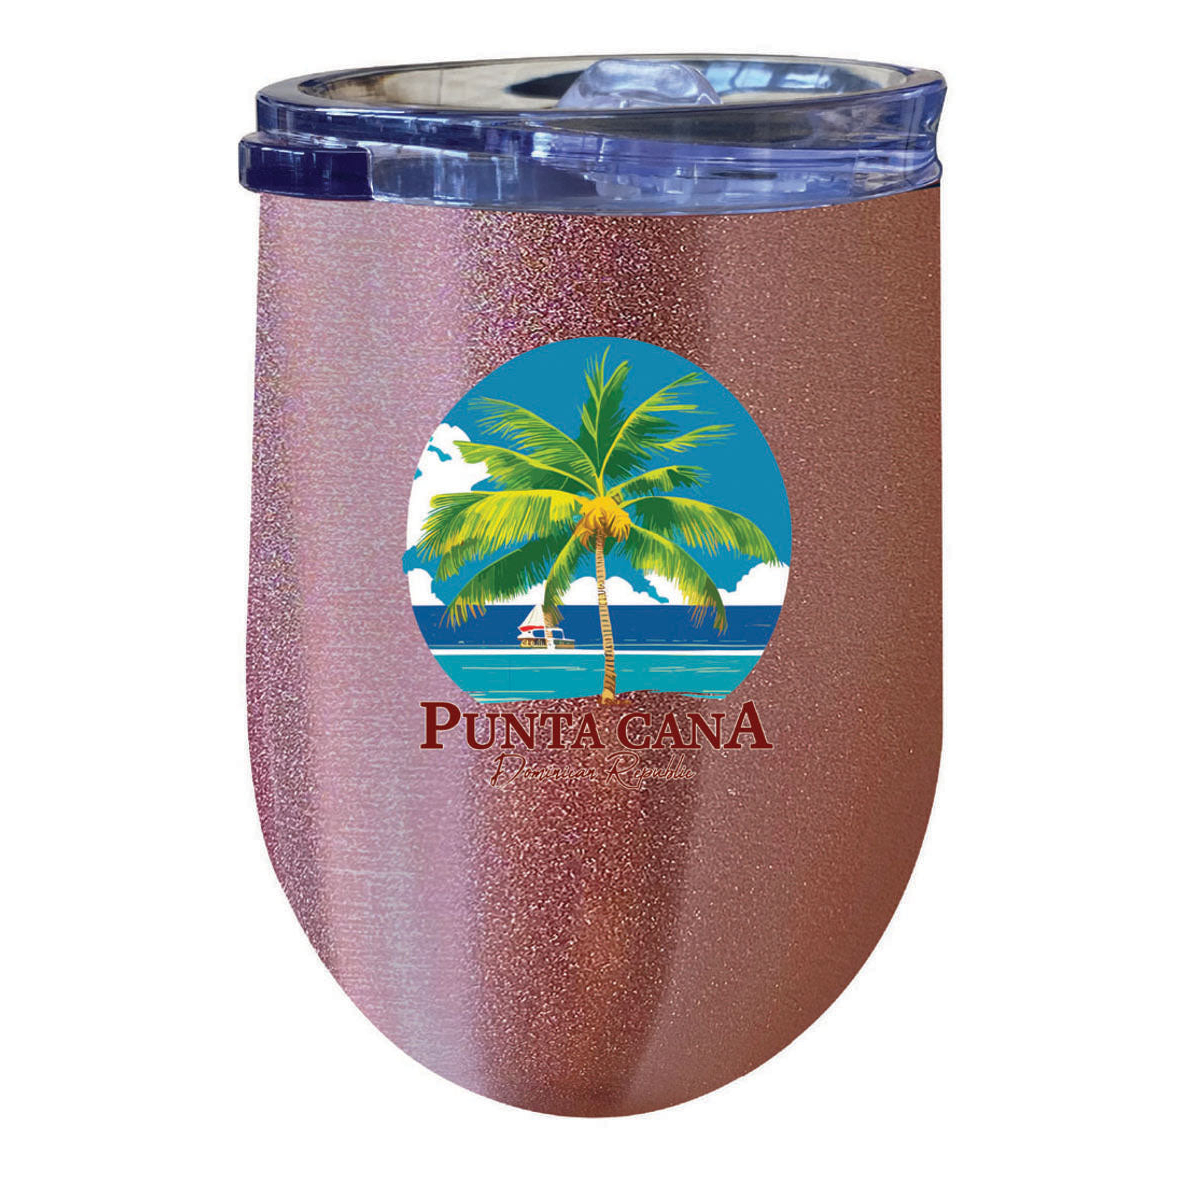 Punta Cana Dominican Republic Souvenir 12 Oz Insulated Wine Stainless Steel Tumbler - Seafoam, PARROT B